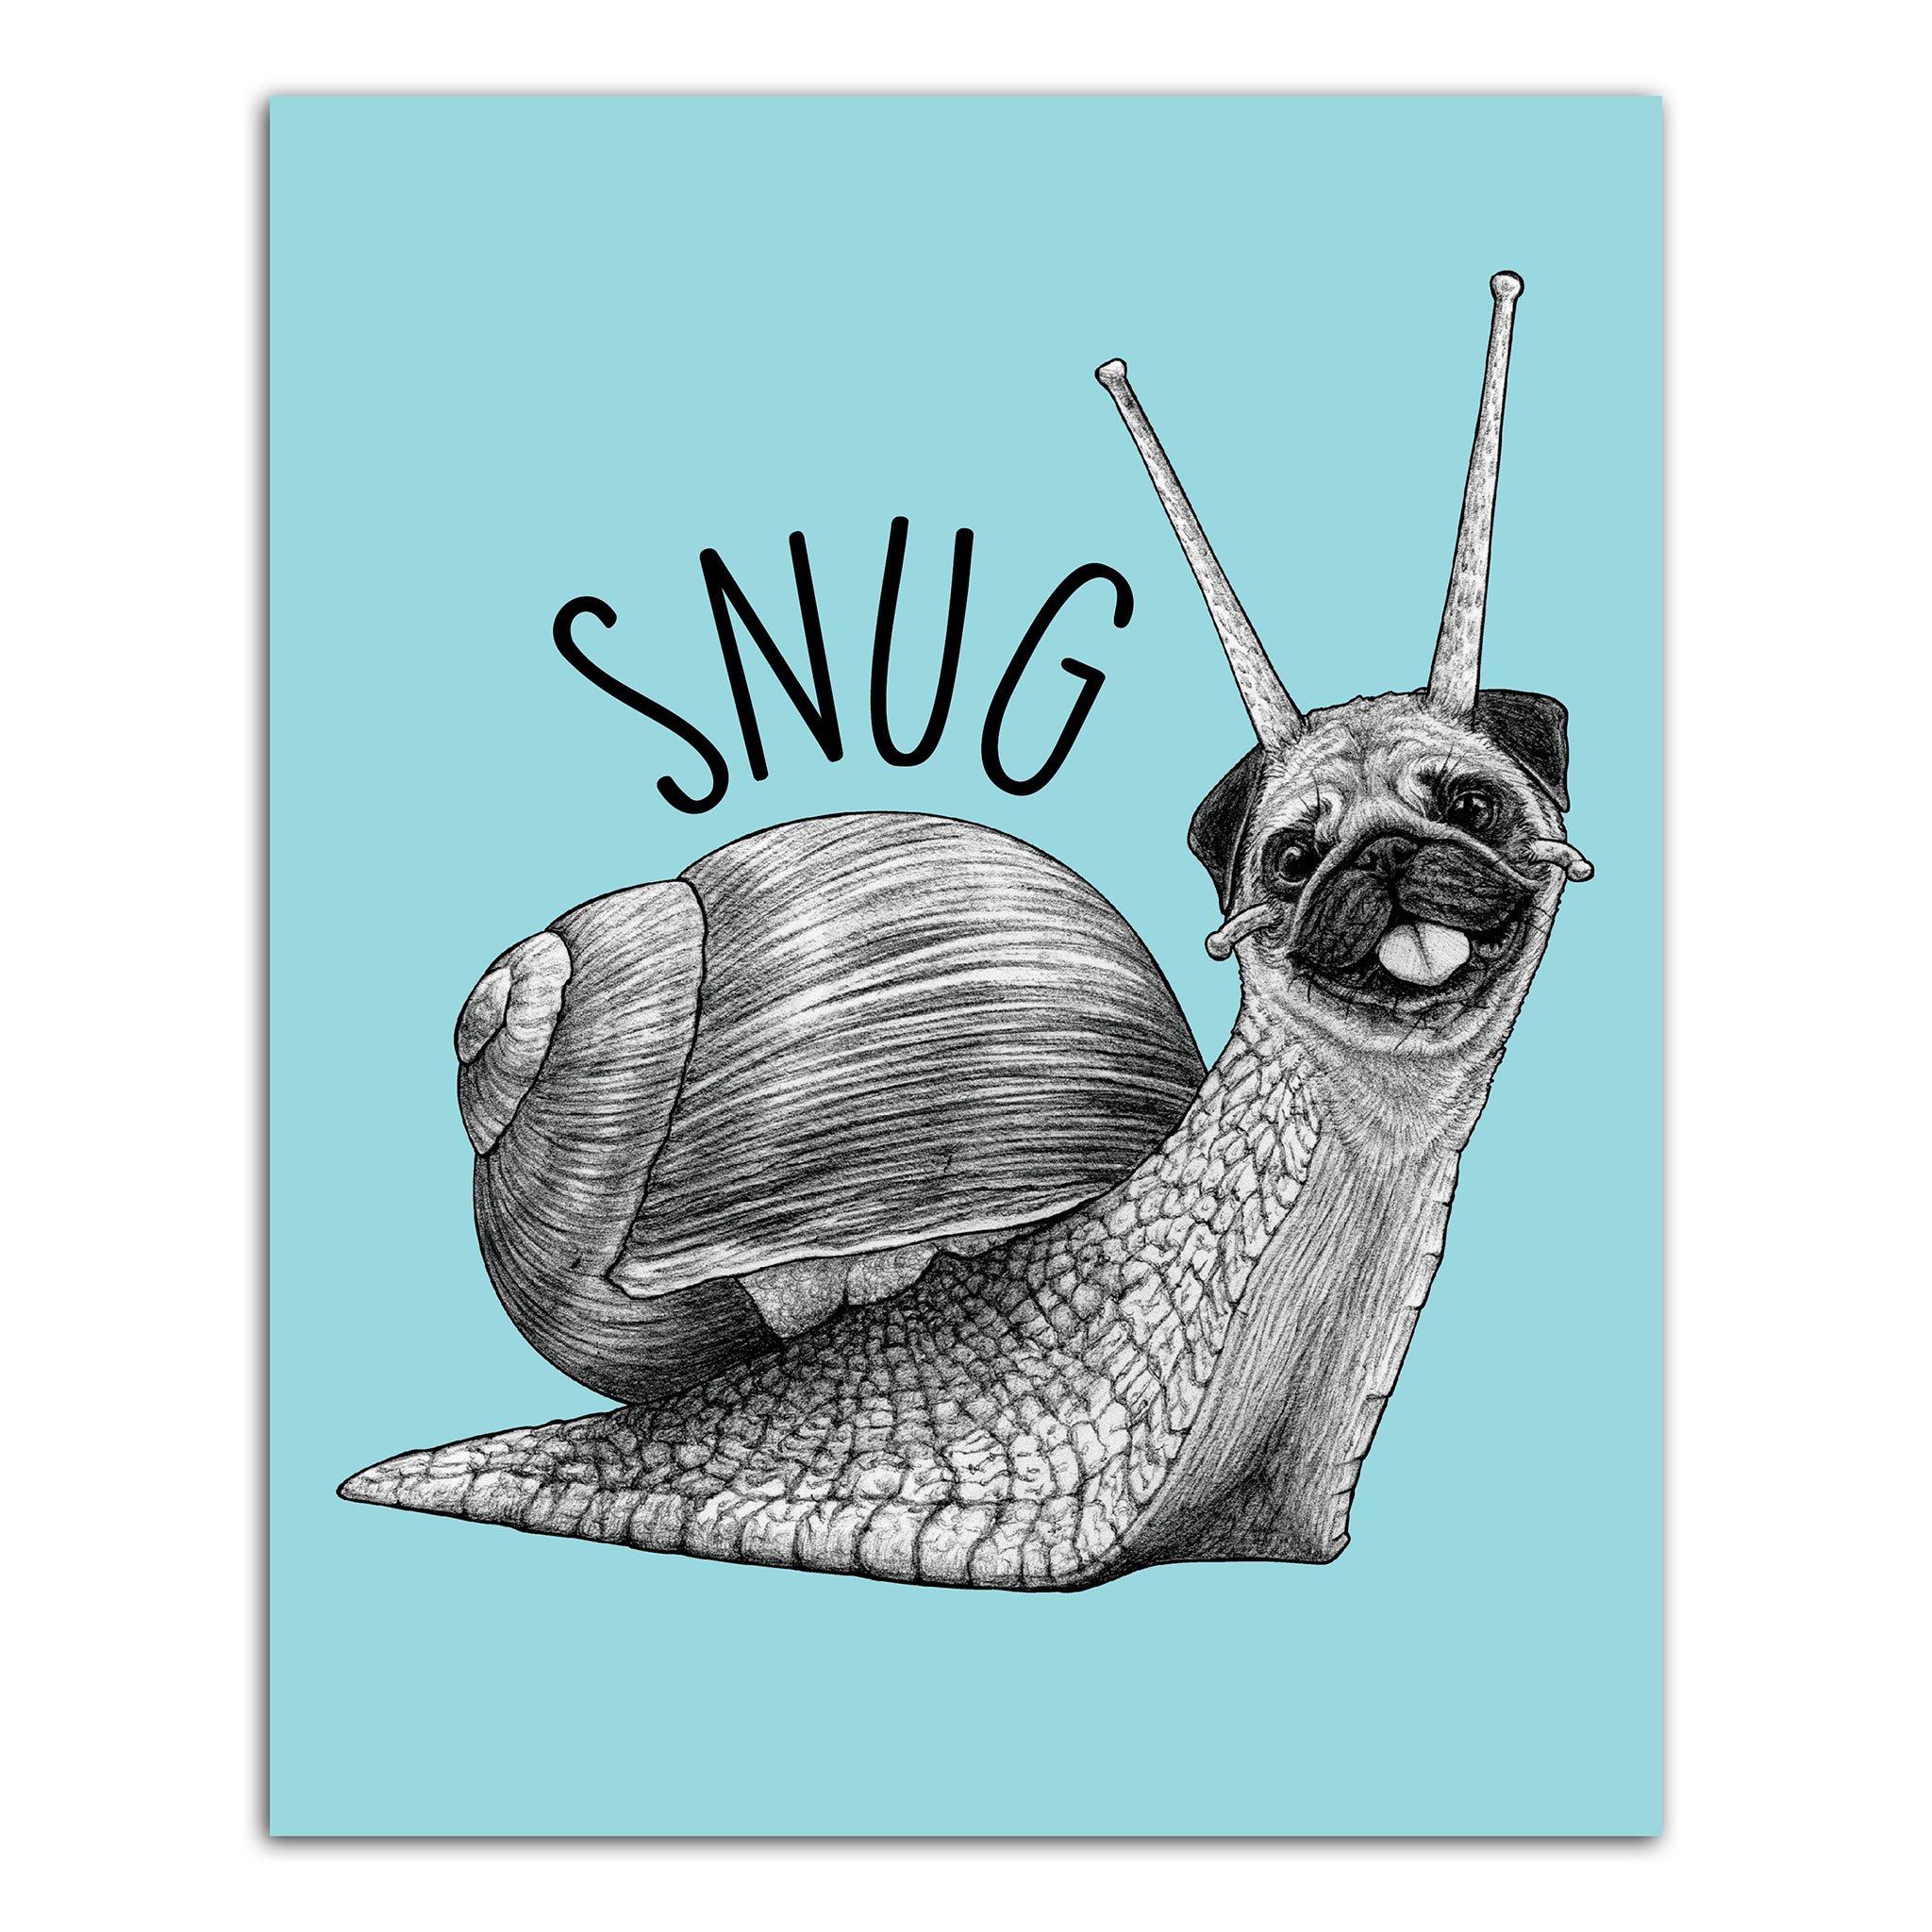 Snug | Snail + Pug Hybrid Animal | 8x10" Color Print